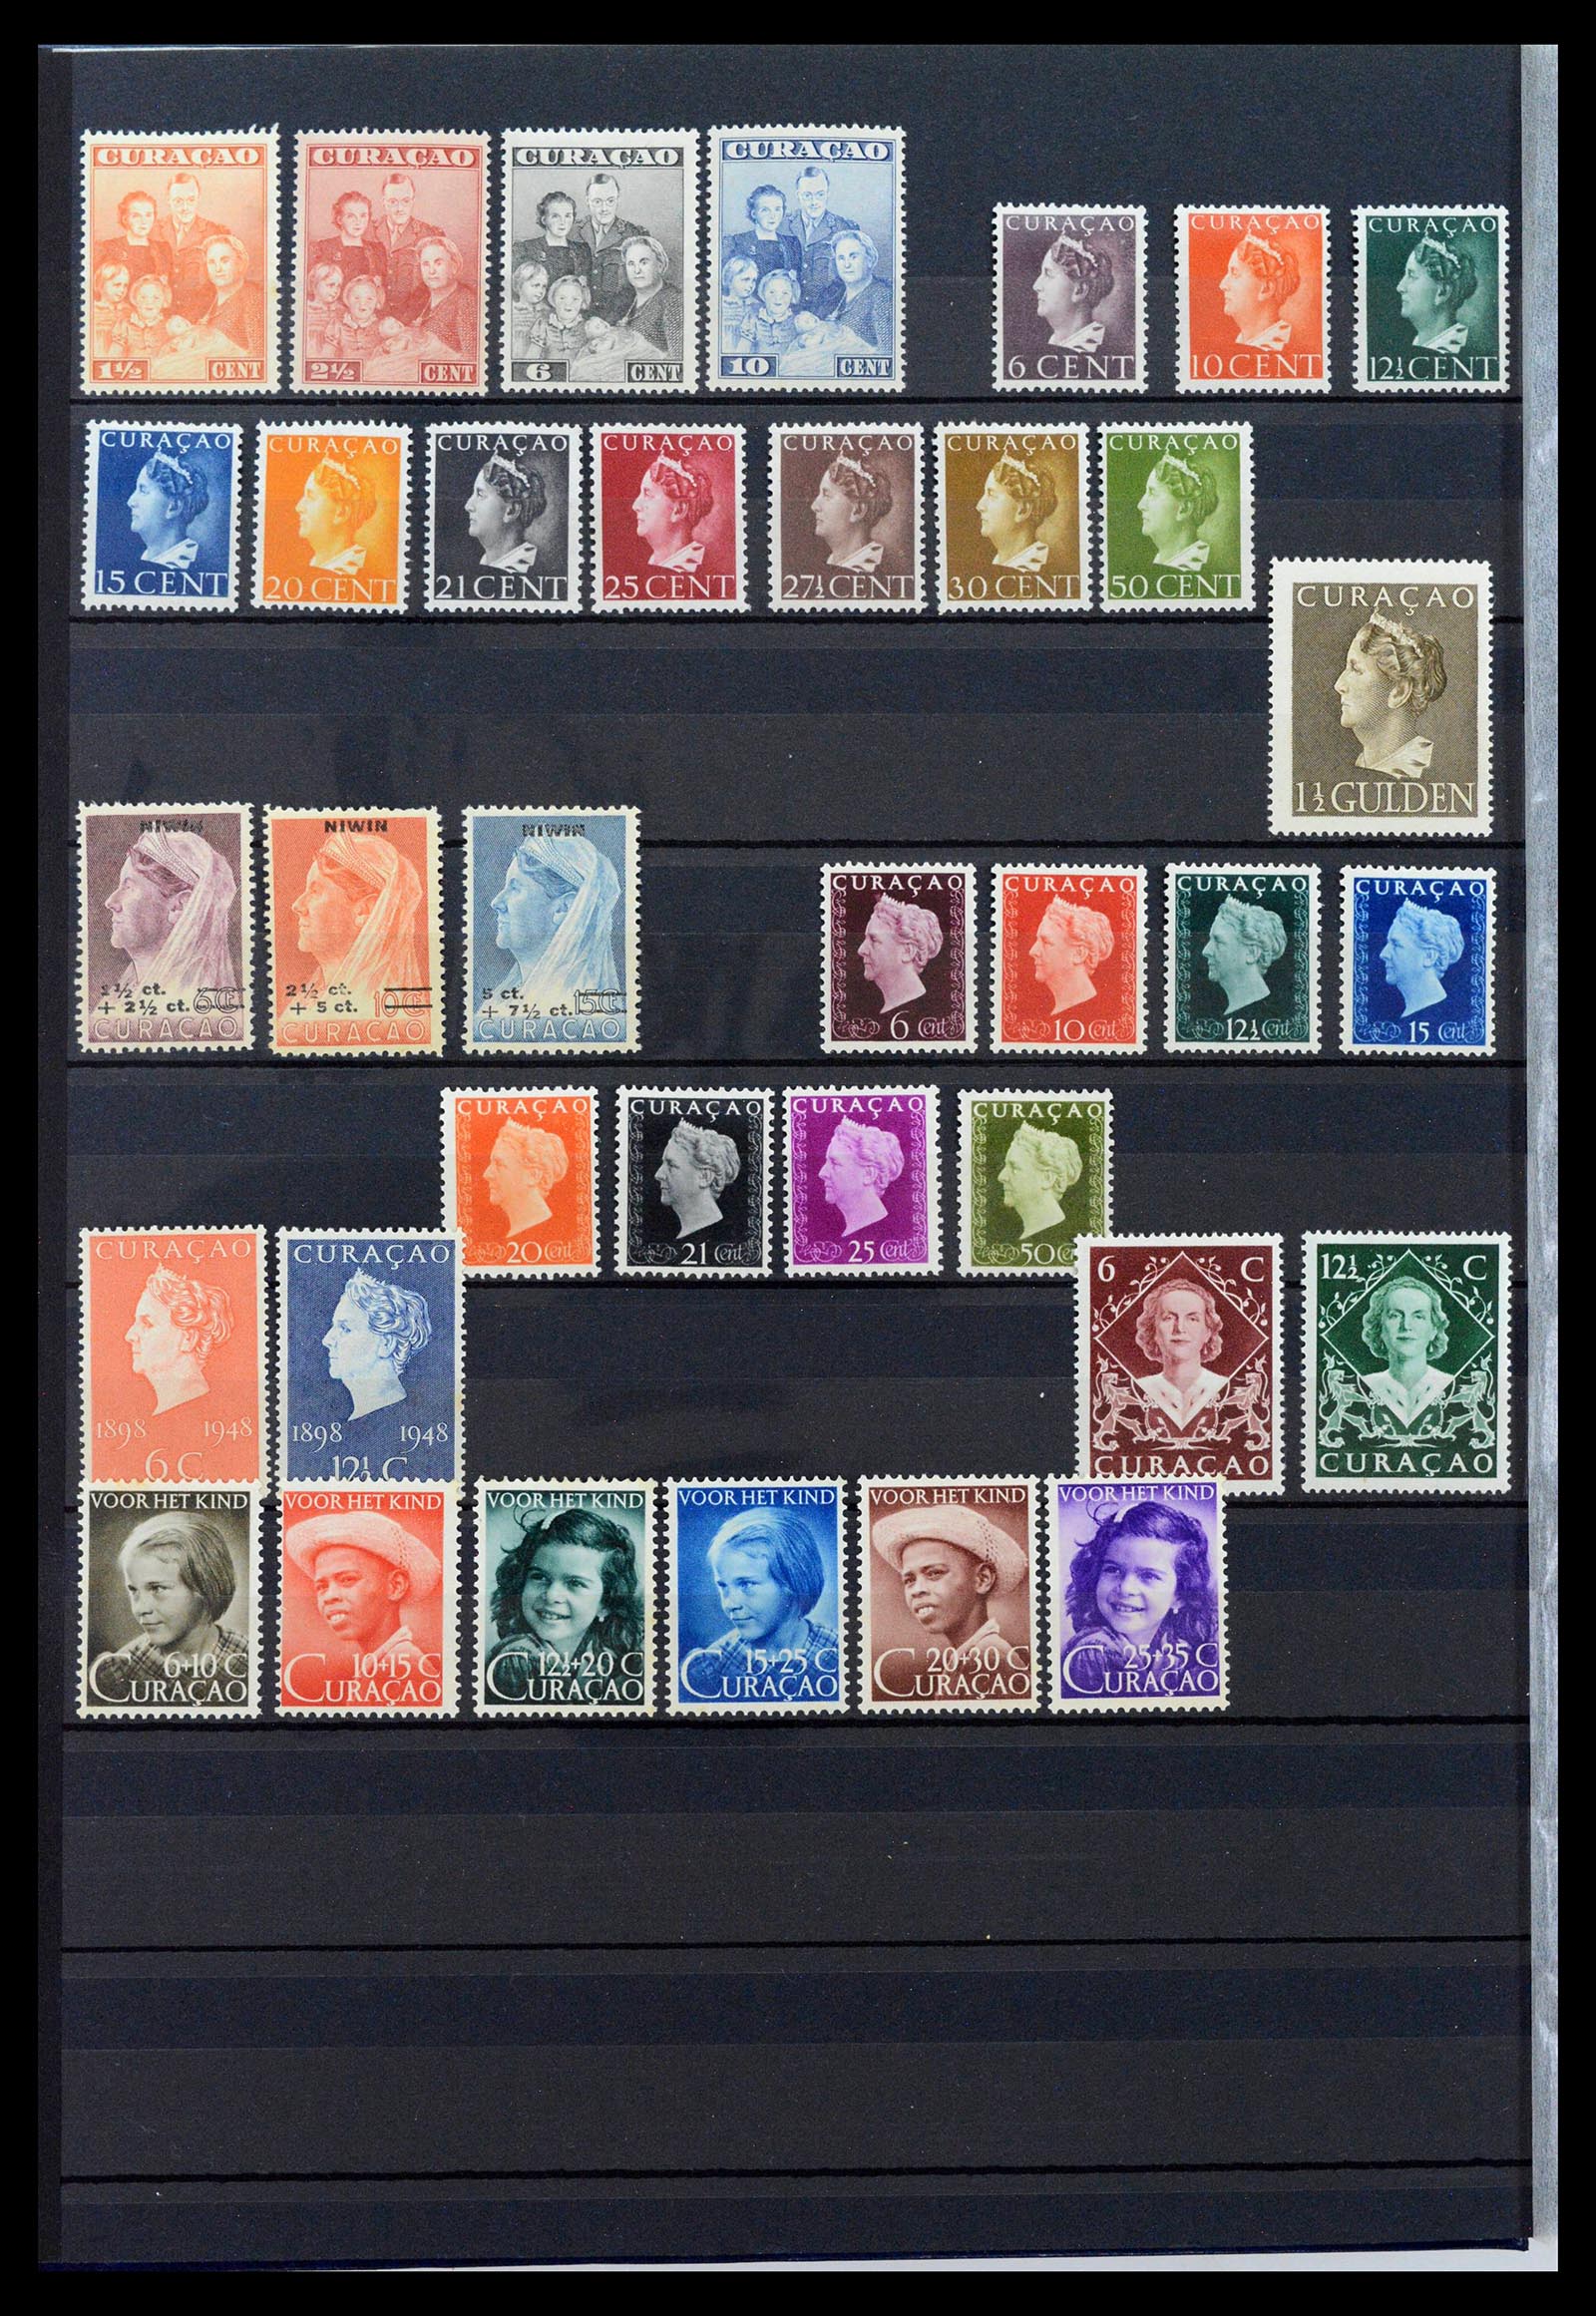 39027 0017 - Stamp collection 39027 Curaçao/Antilles/Aruba 1873-2009.